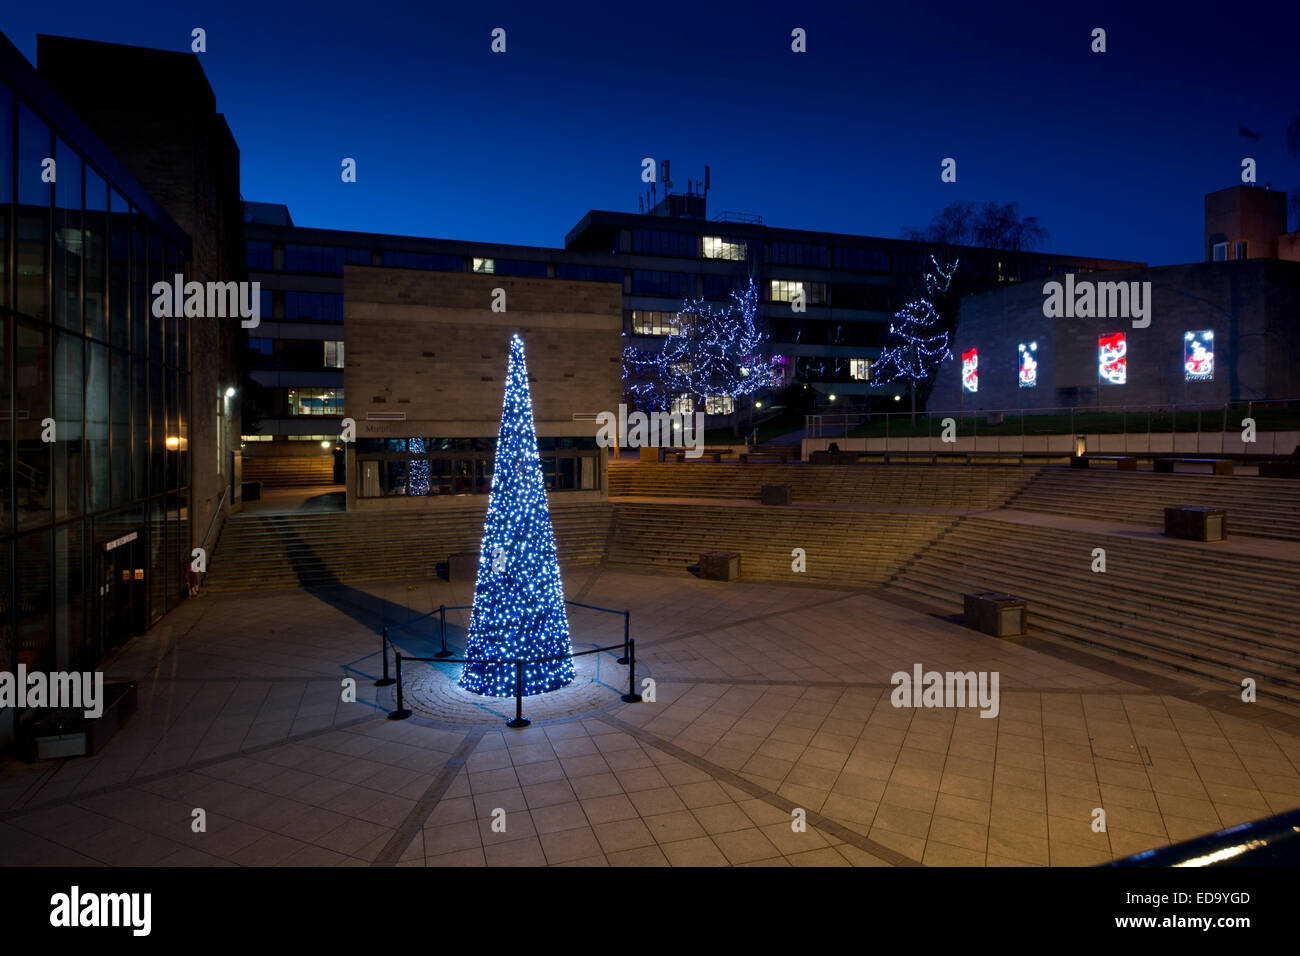 Der Square Campus UEA University of East Anglia Nacht Christmas tree Stockfoto